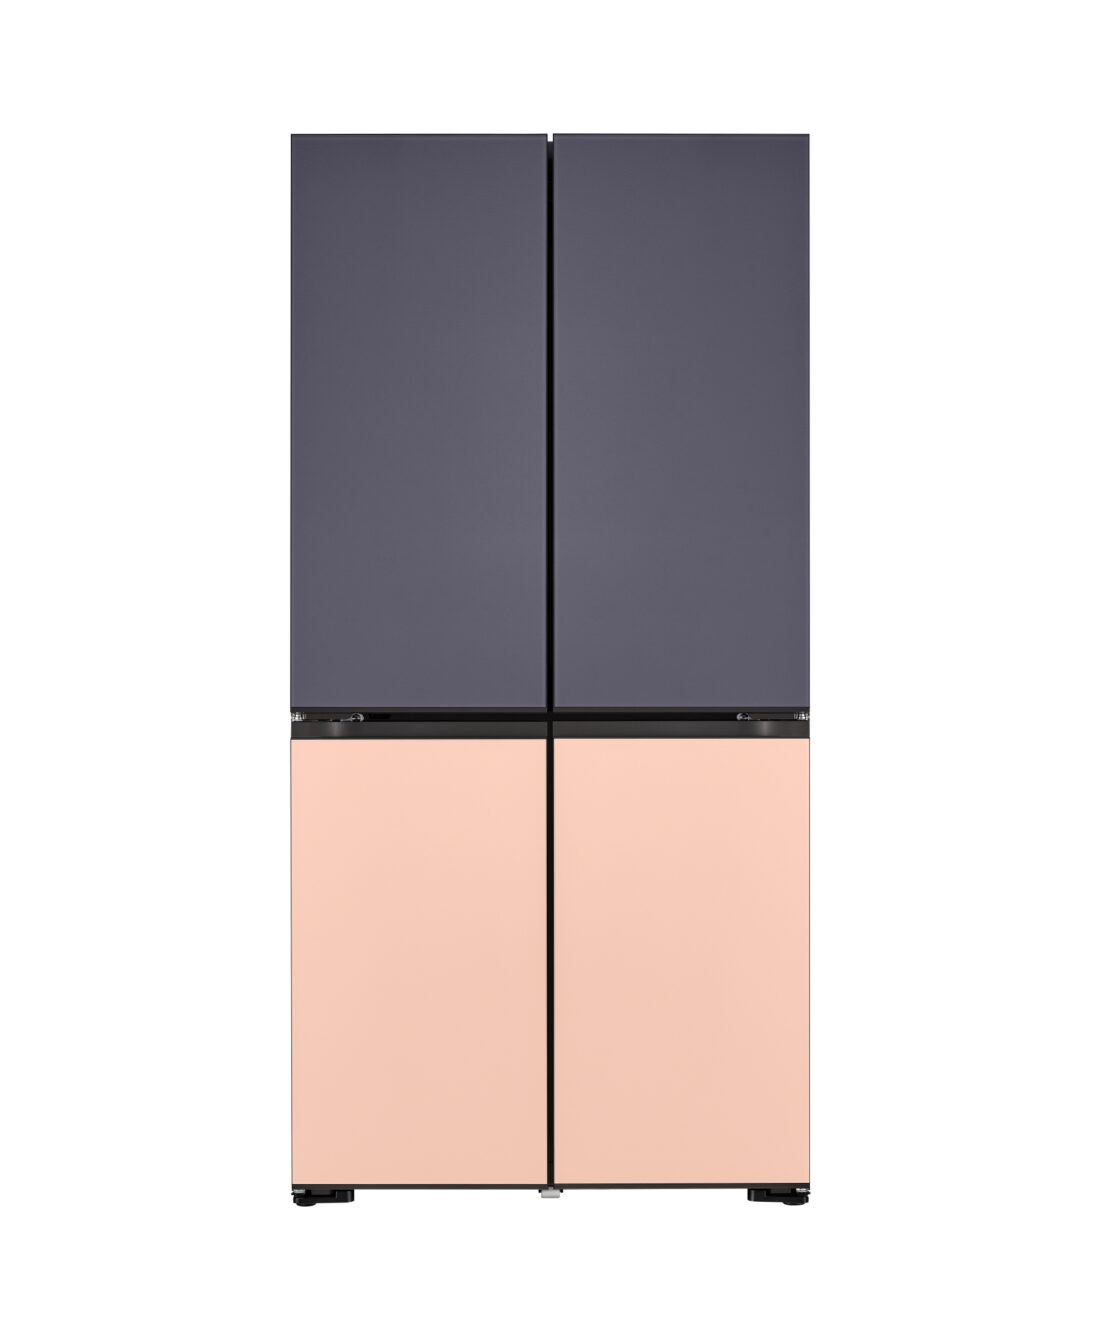 LG MoodUPTM refrigerator in Paris theme color